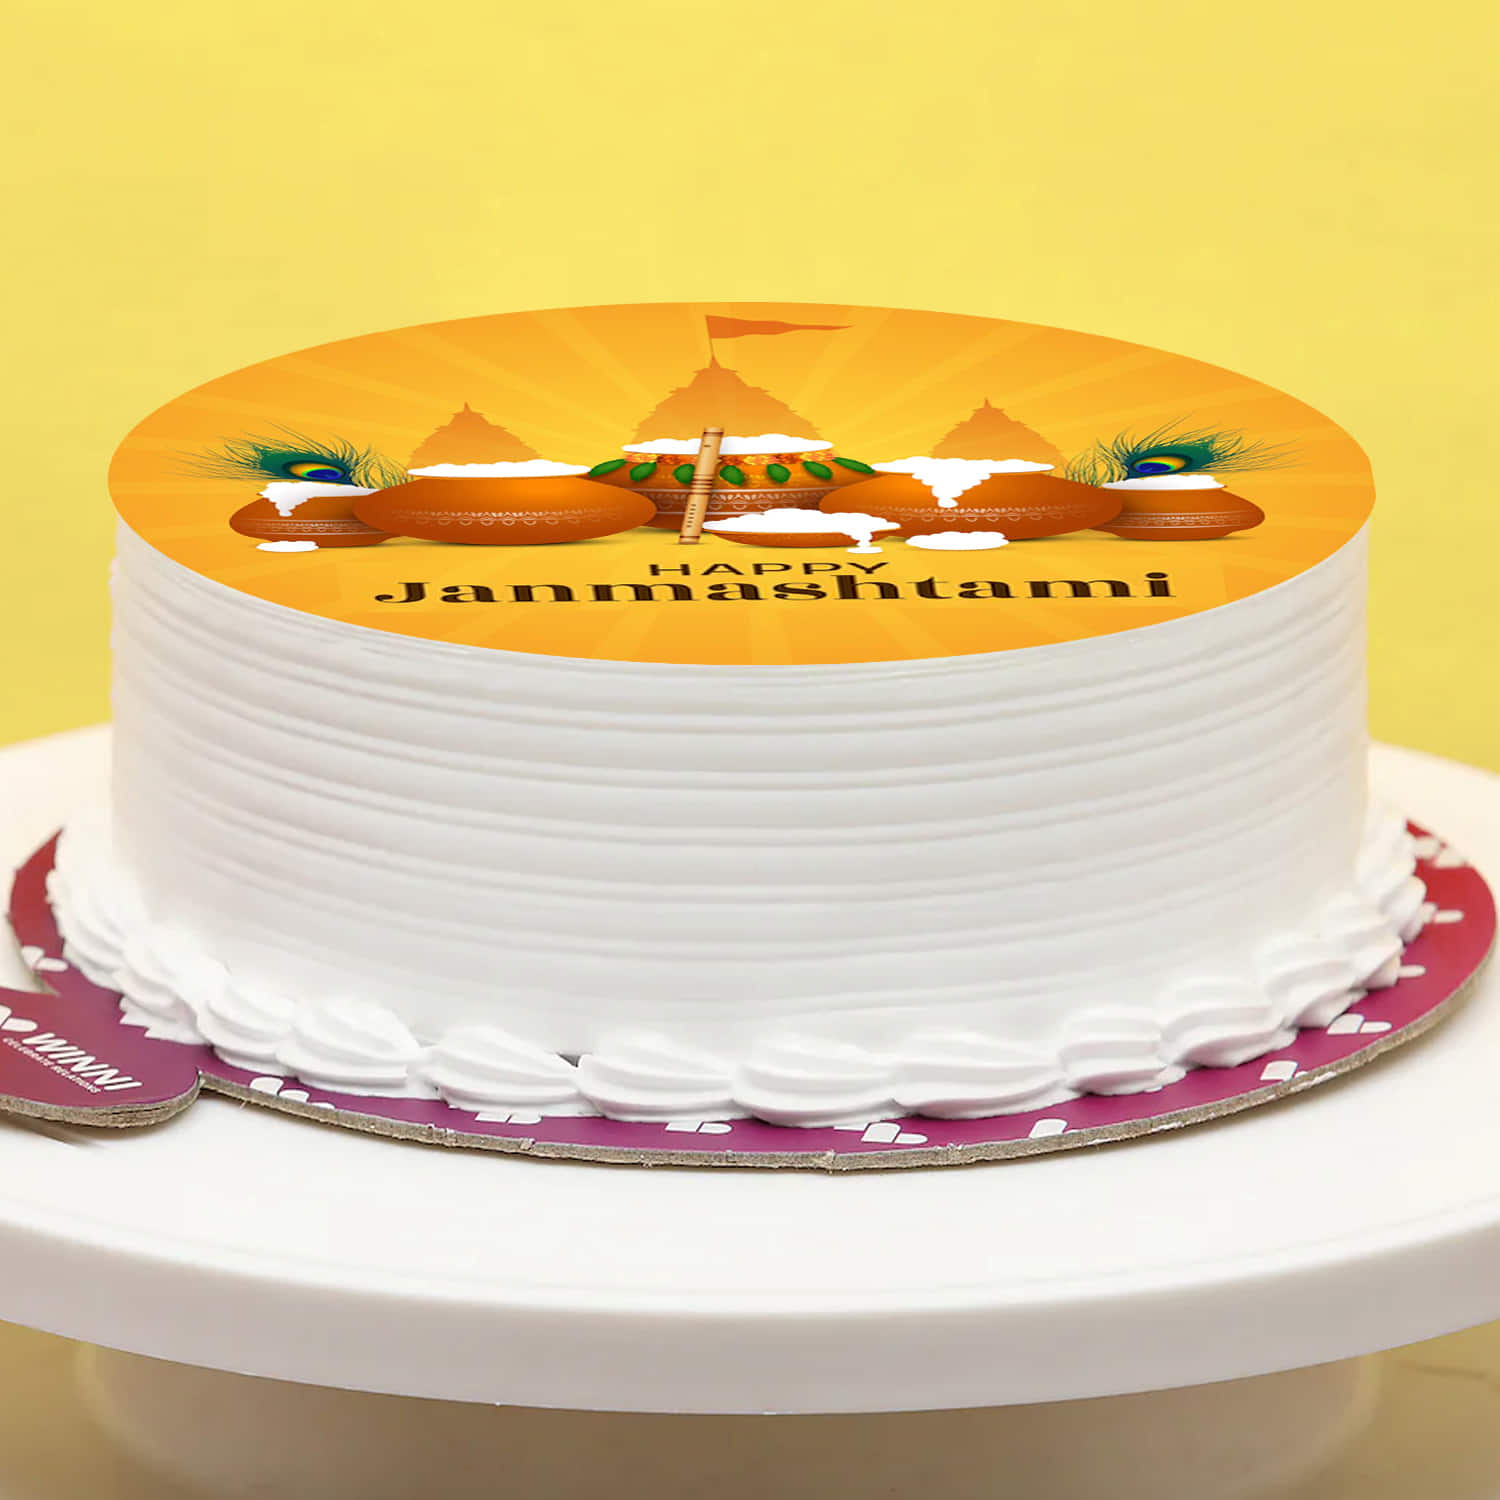 Matki cake जन्माष्टमी पर घर मे बनाओ आसानी से मटका केक | Matka cake recipe |  Janmashtami special | birthday cake - video Dailymotion